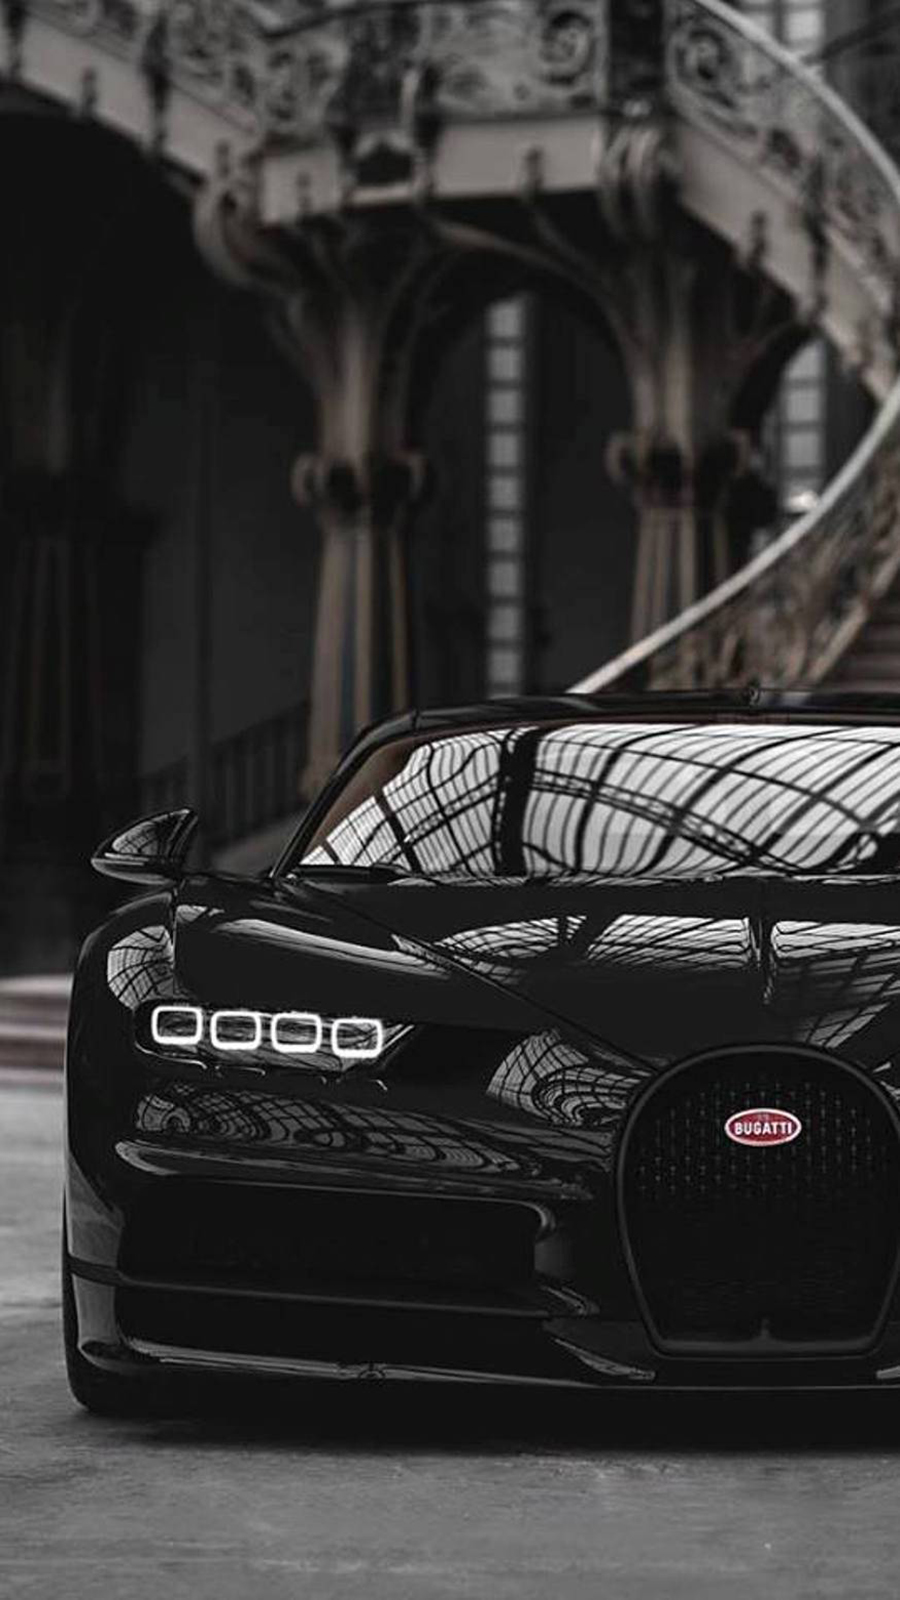 Bugatti_Chiron-dark edition HD Wallpapers download